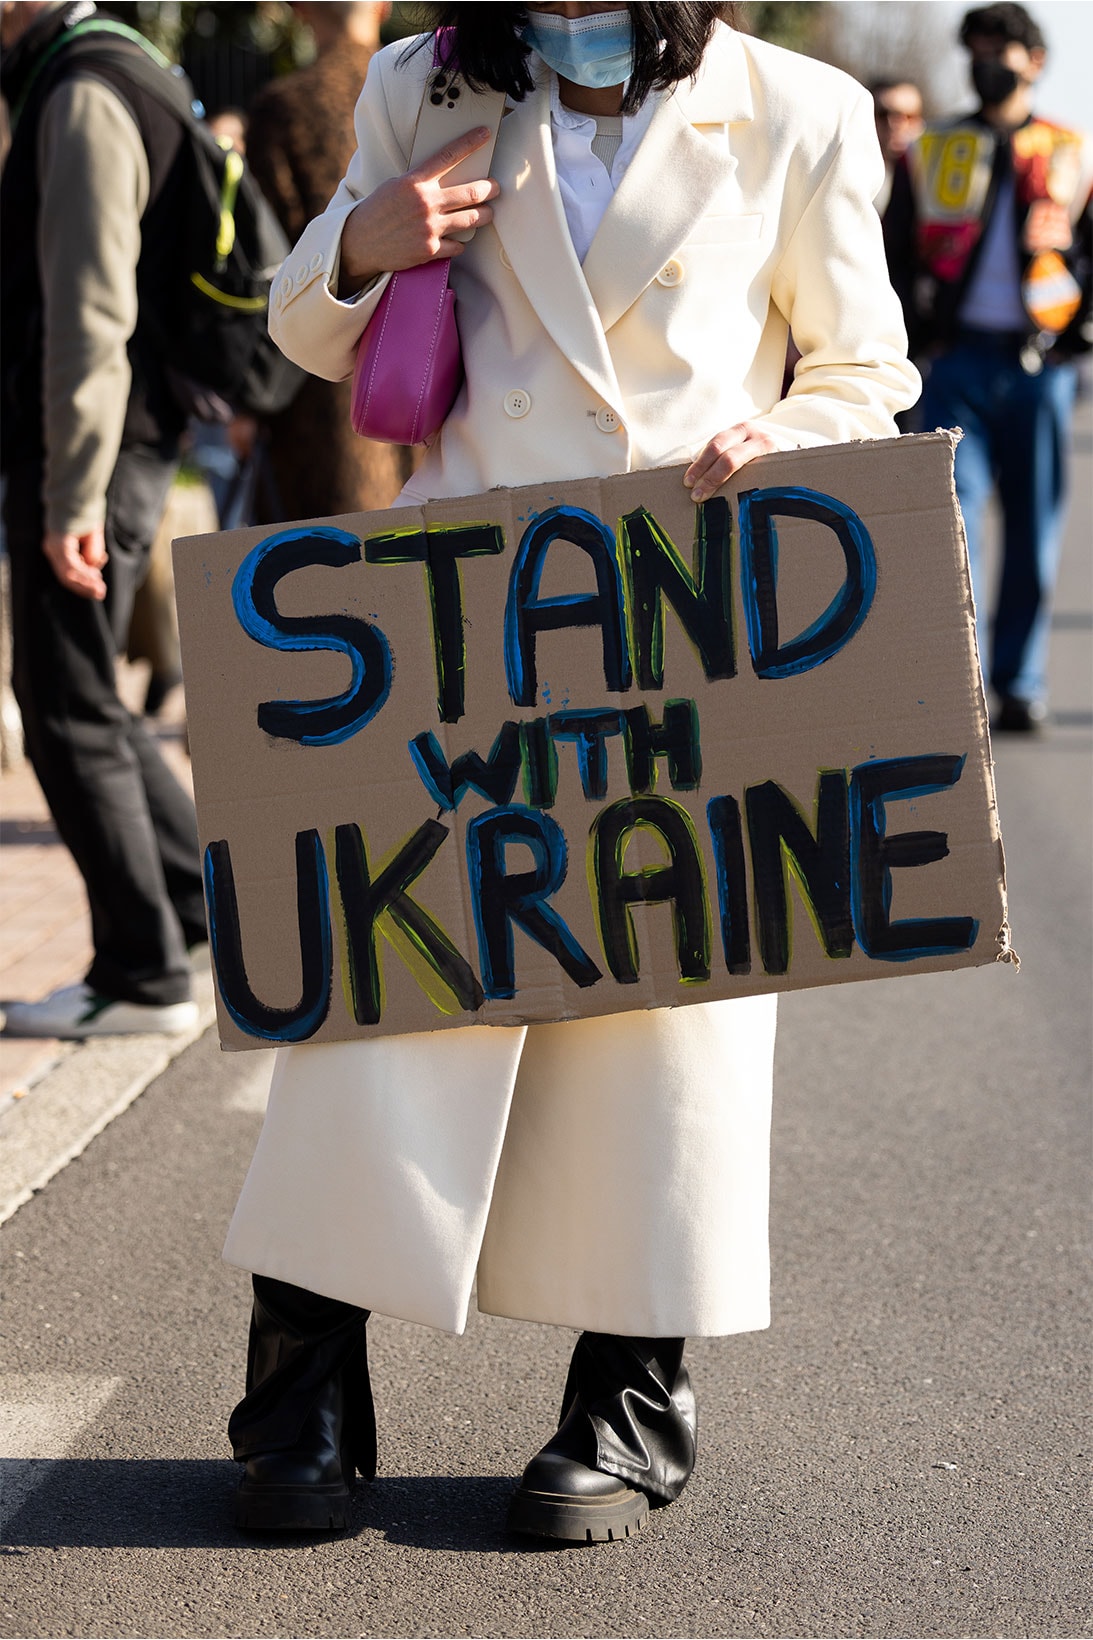 Milan Fashion Week Russia Ukraine Conflict War Protestors 